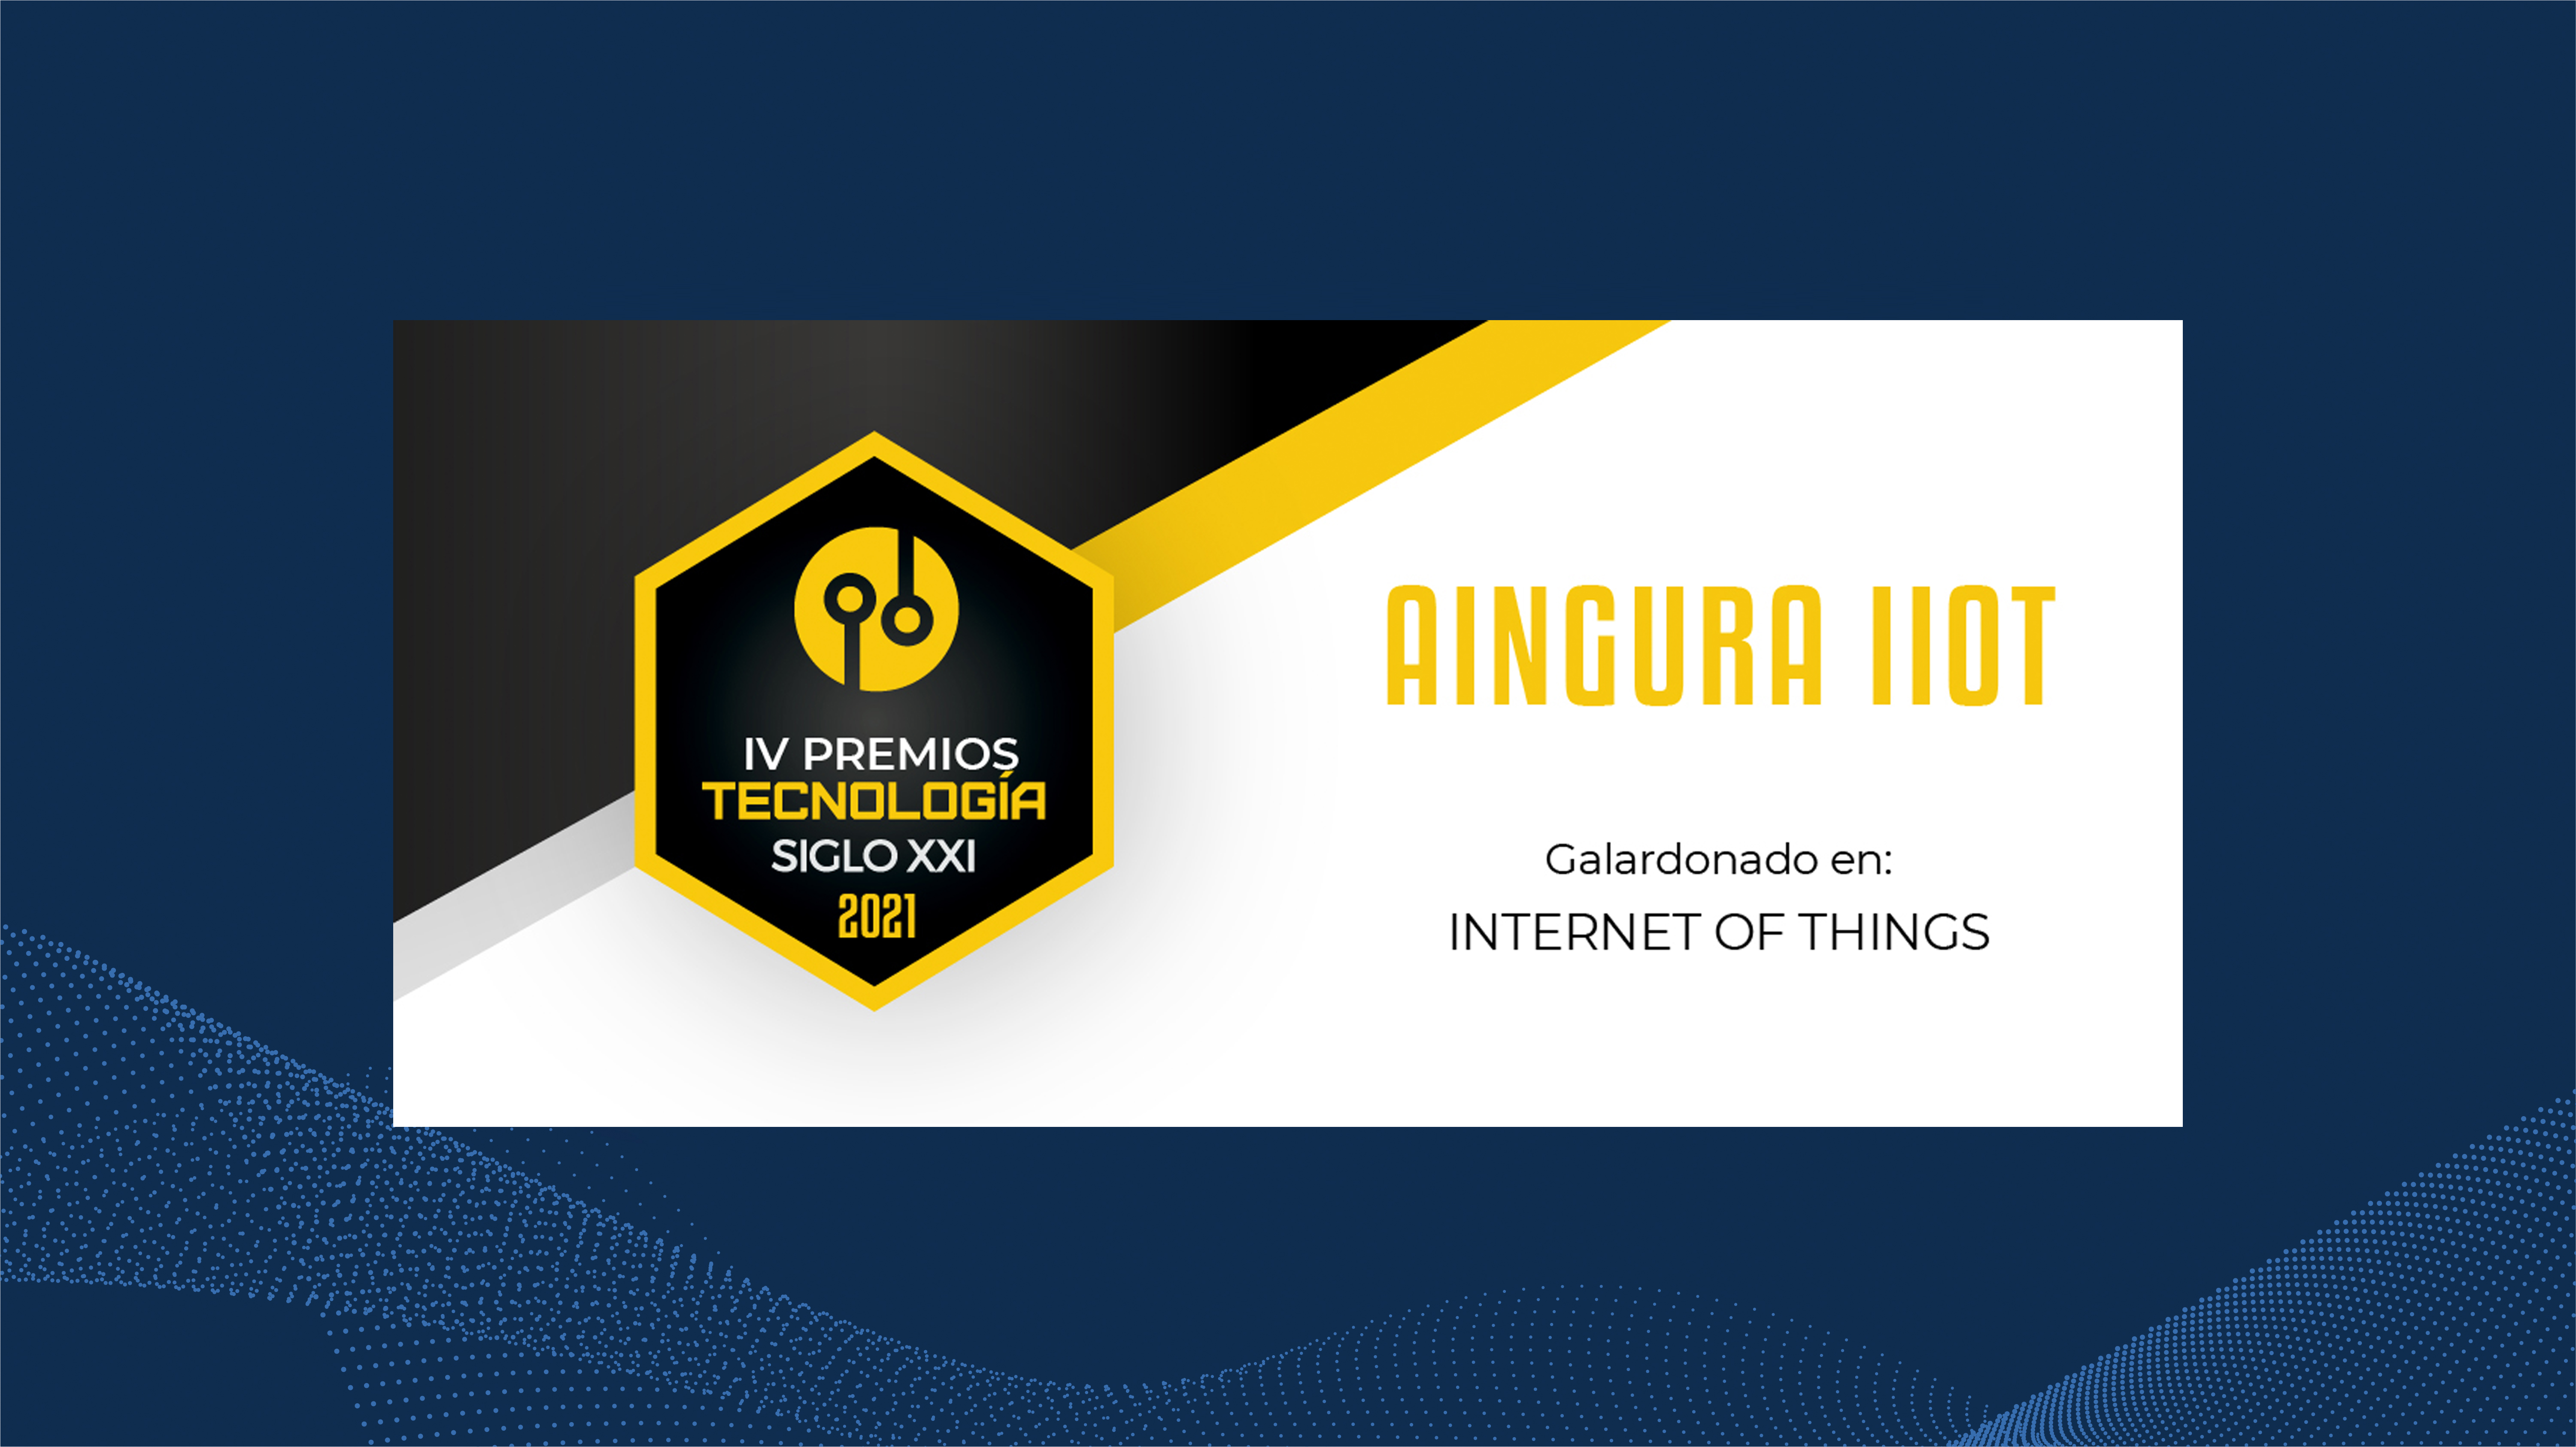 Aingura IIoT awarded as “Best Internet of Things Company"